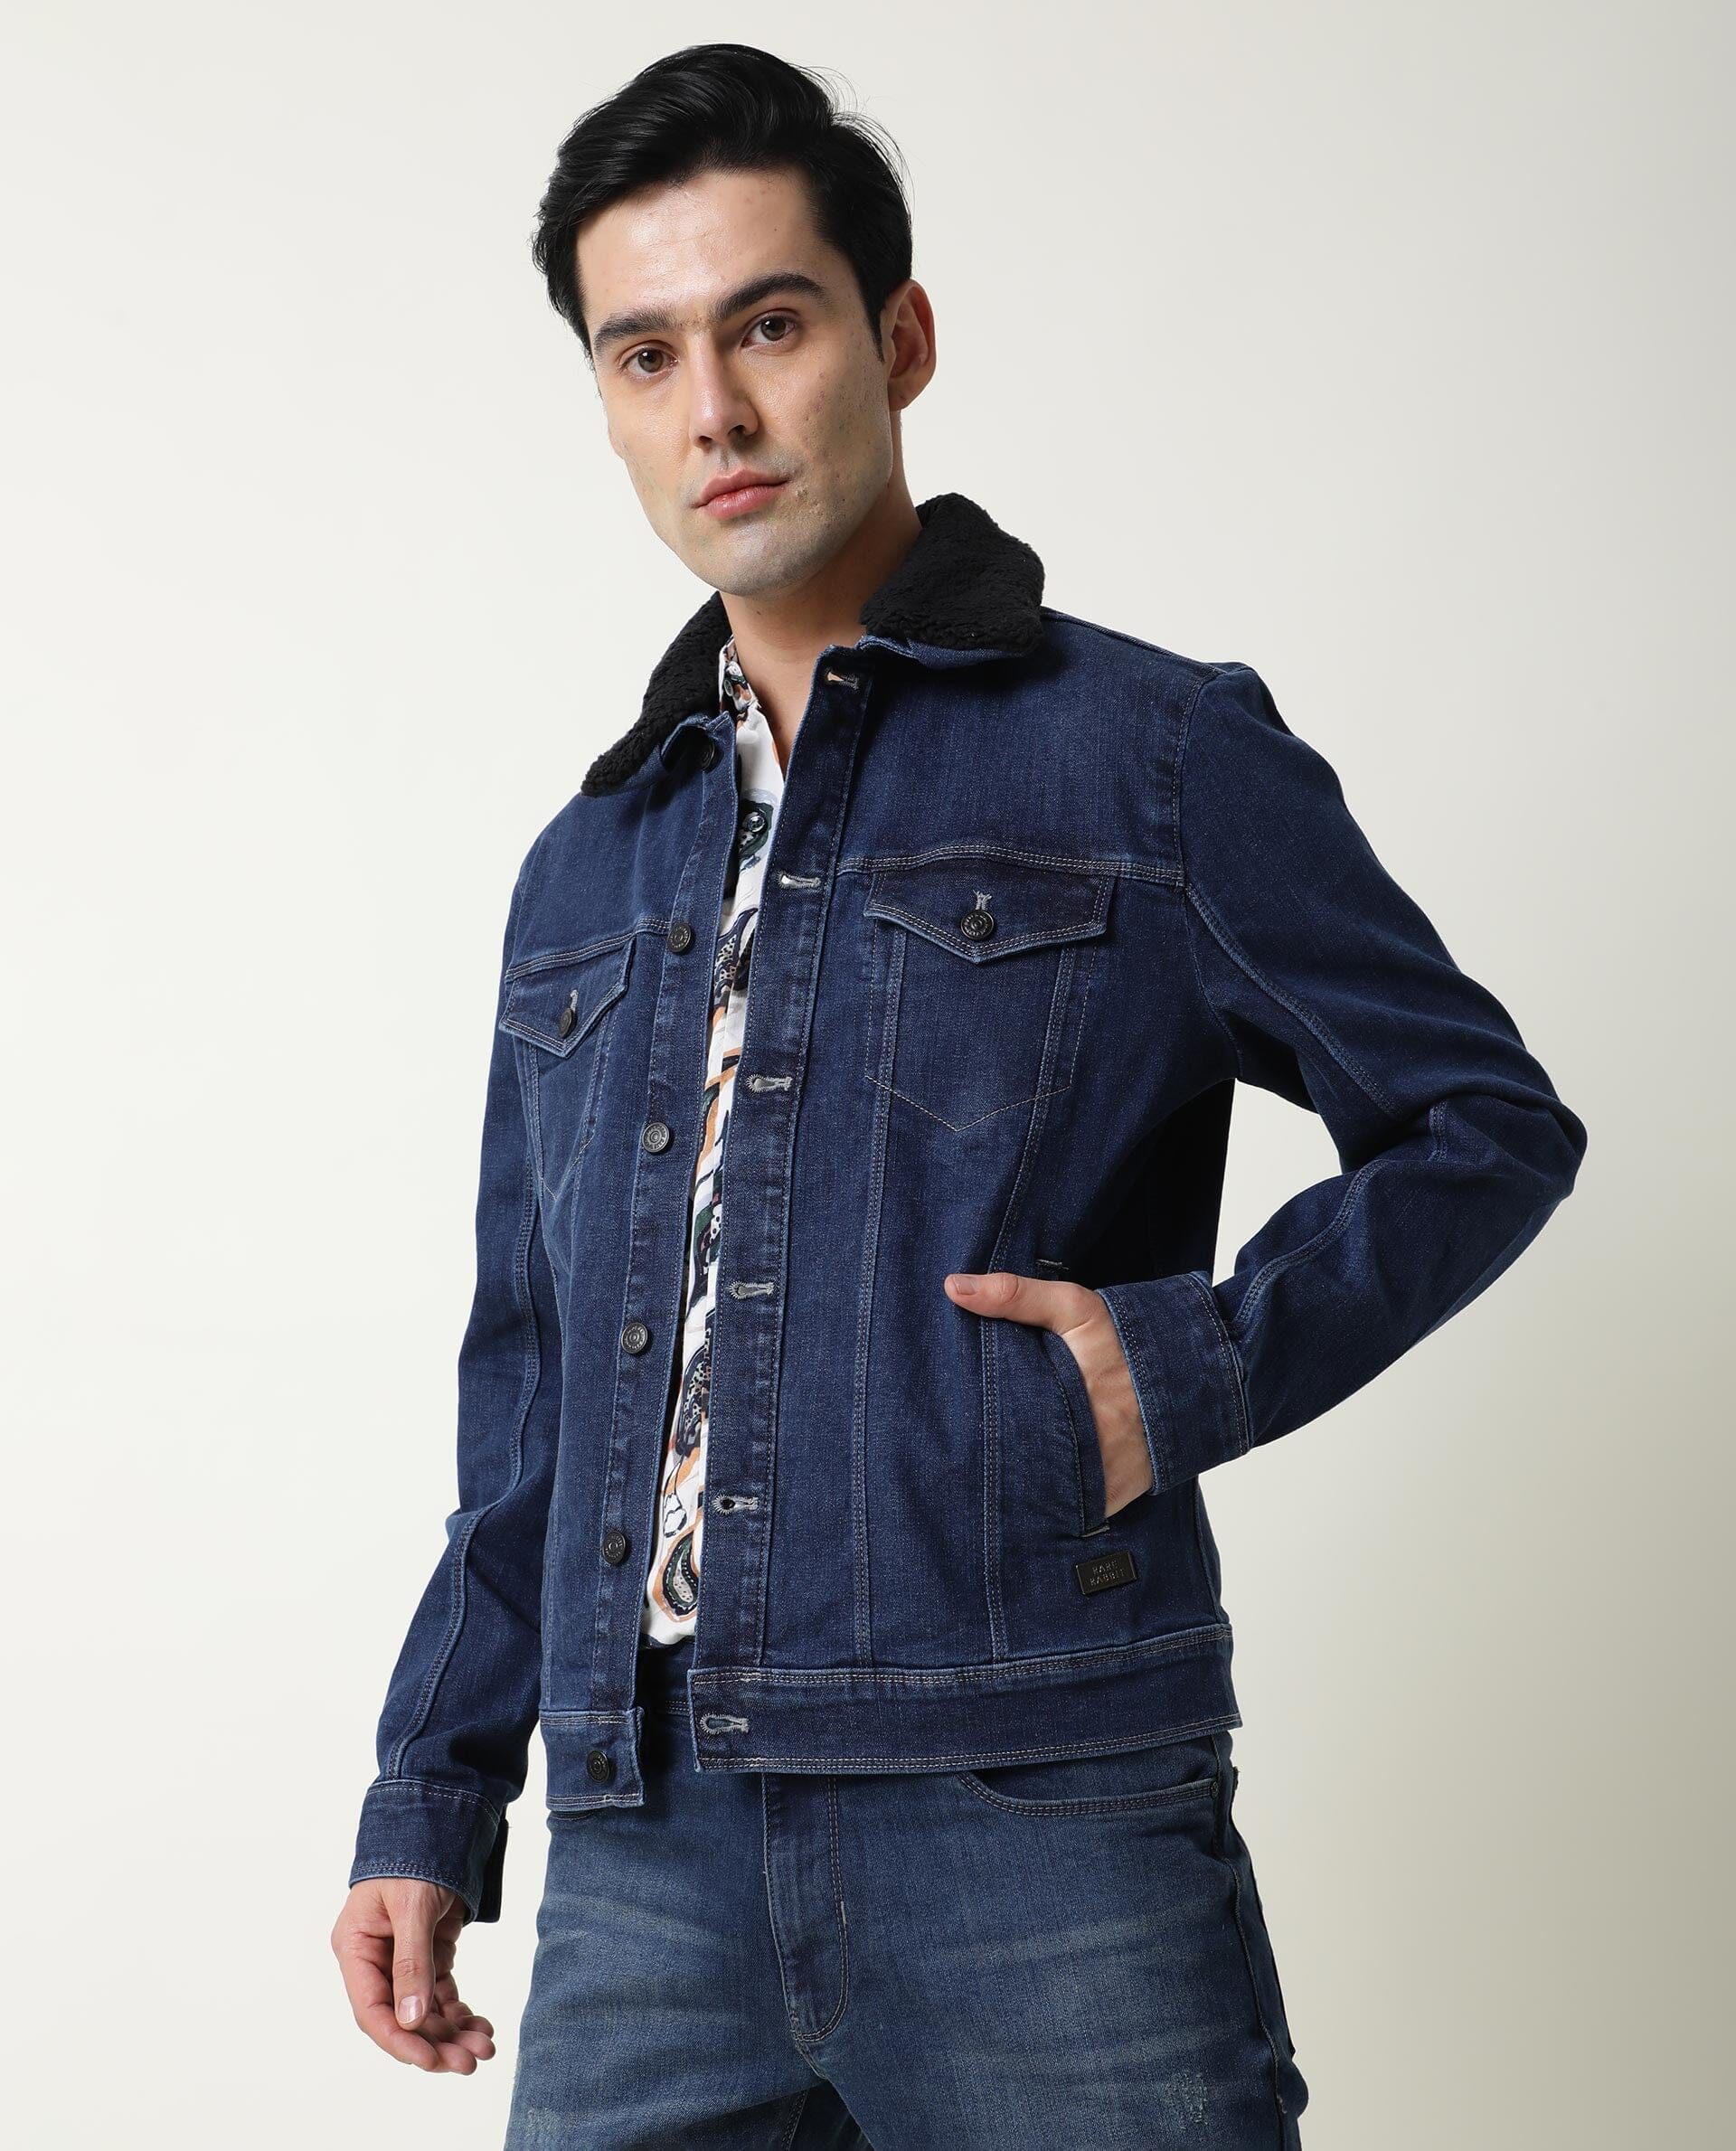 Buy Black Jackets & Coats for Men by LEVIS Online | Ajio.com